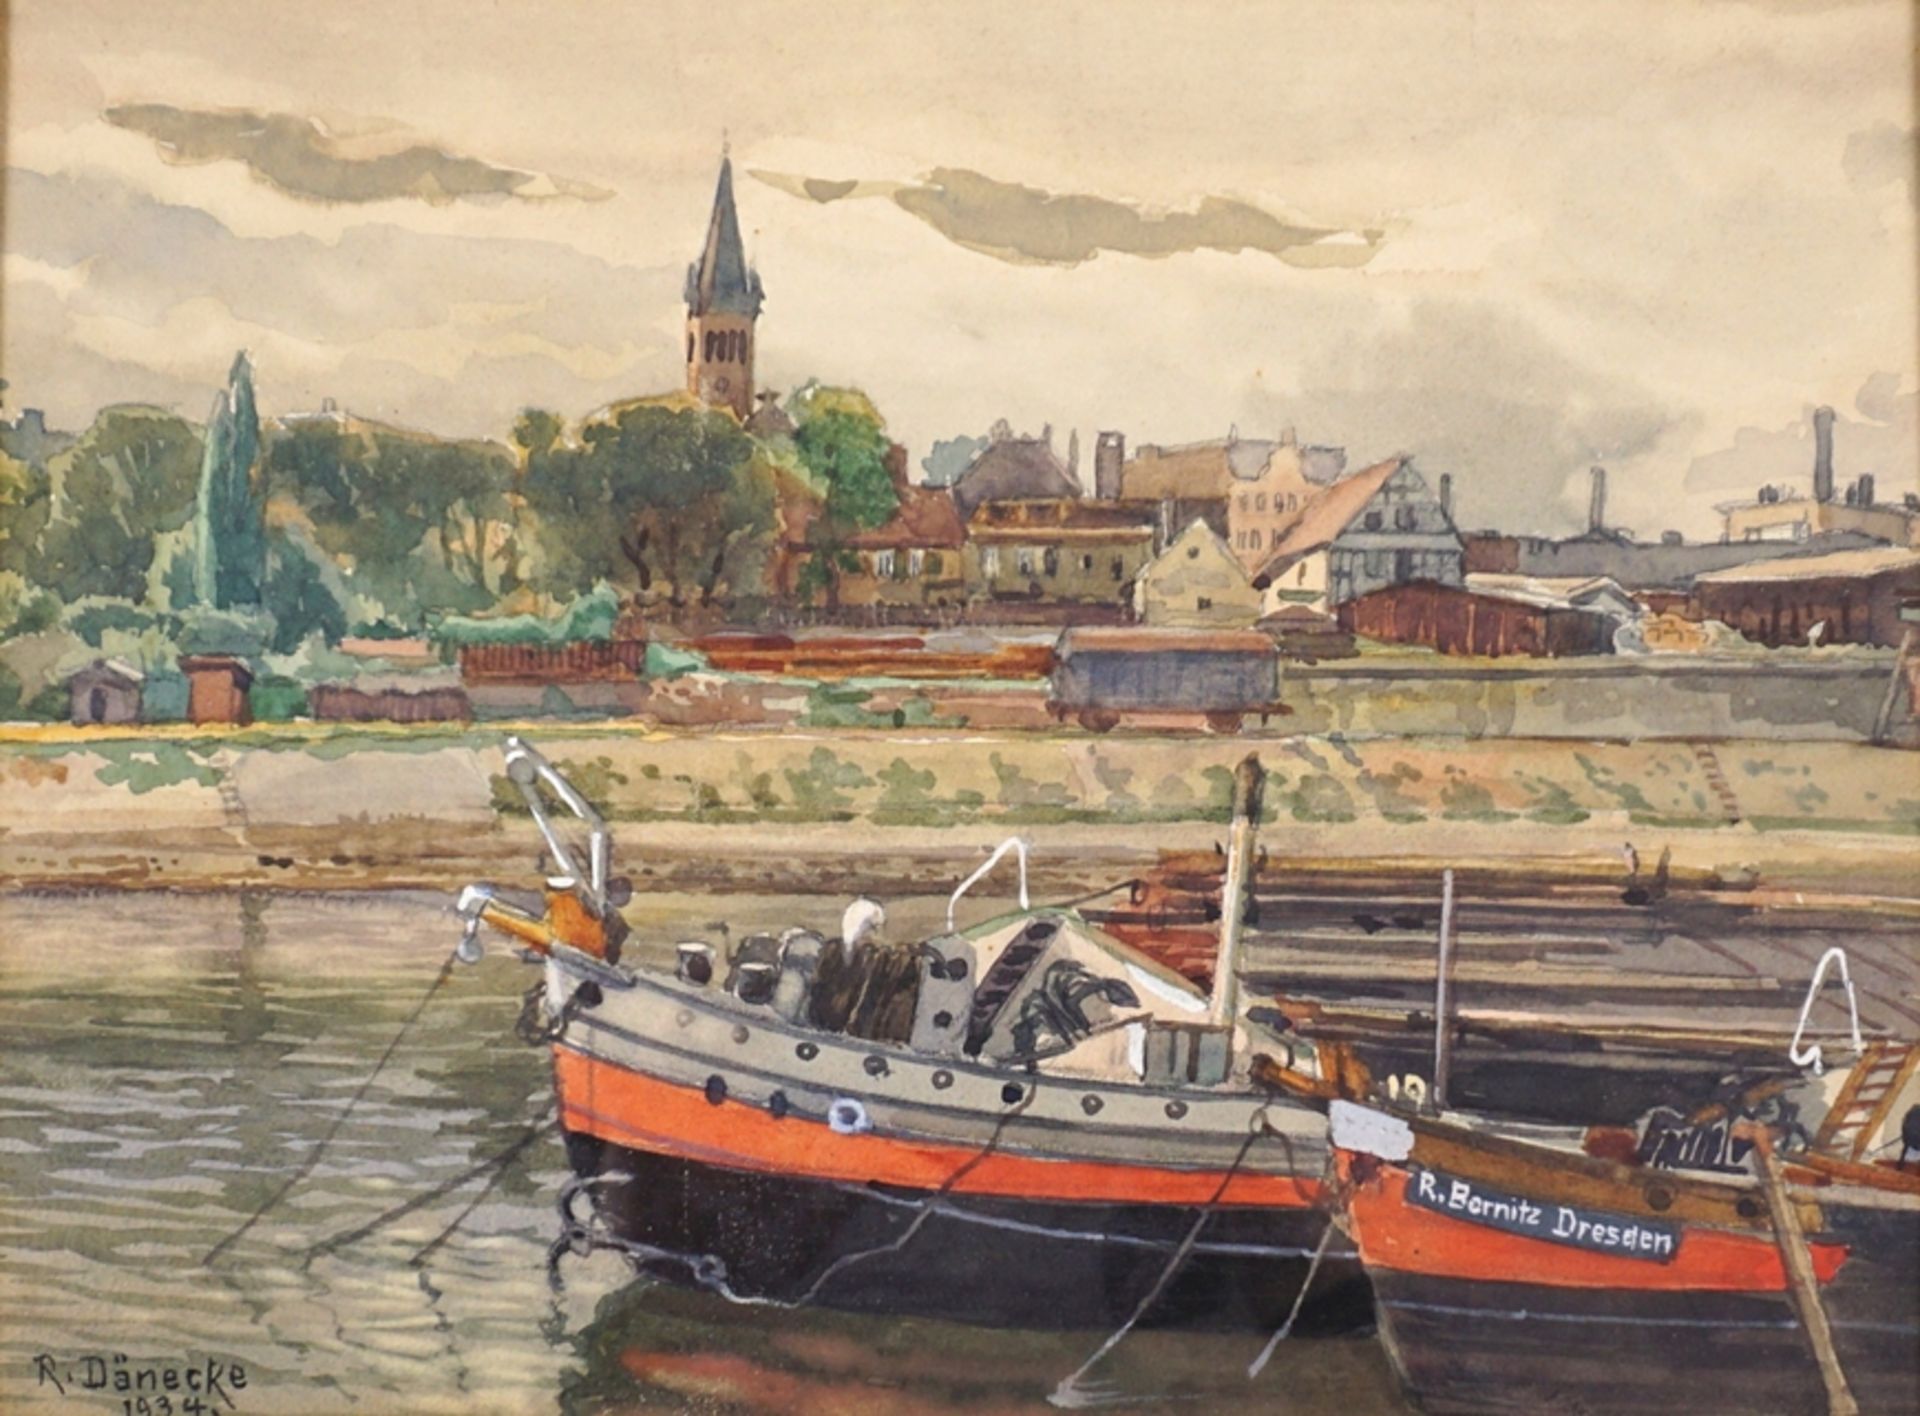 R. Dänecke, "Elbhafen", 1934, Aquarell